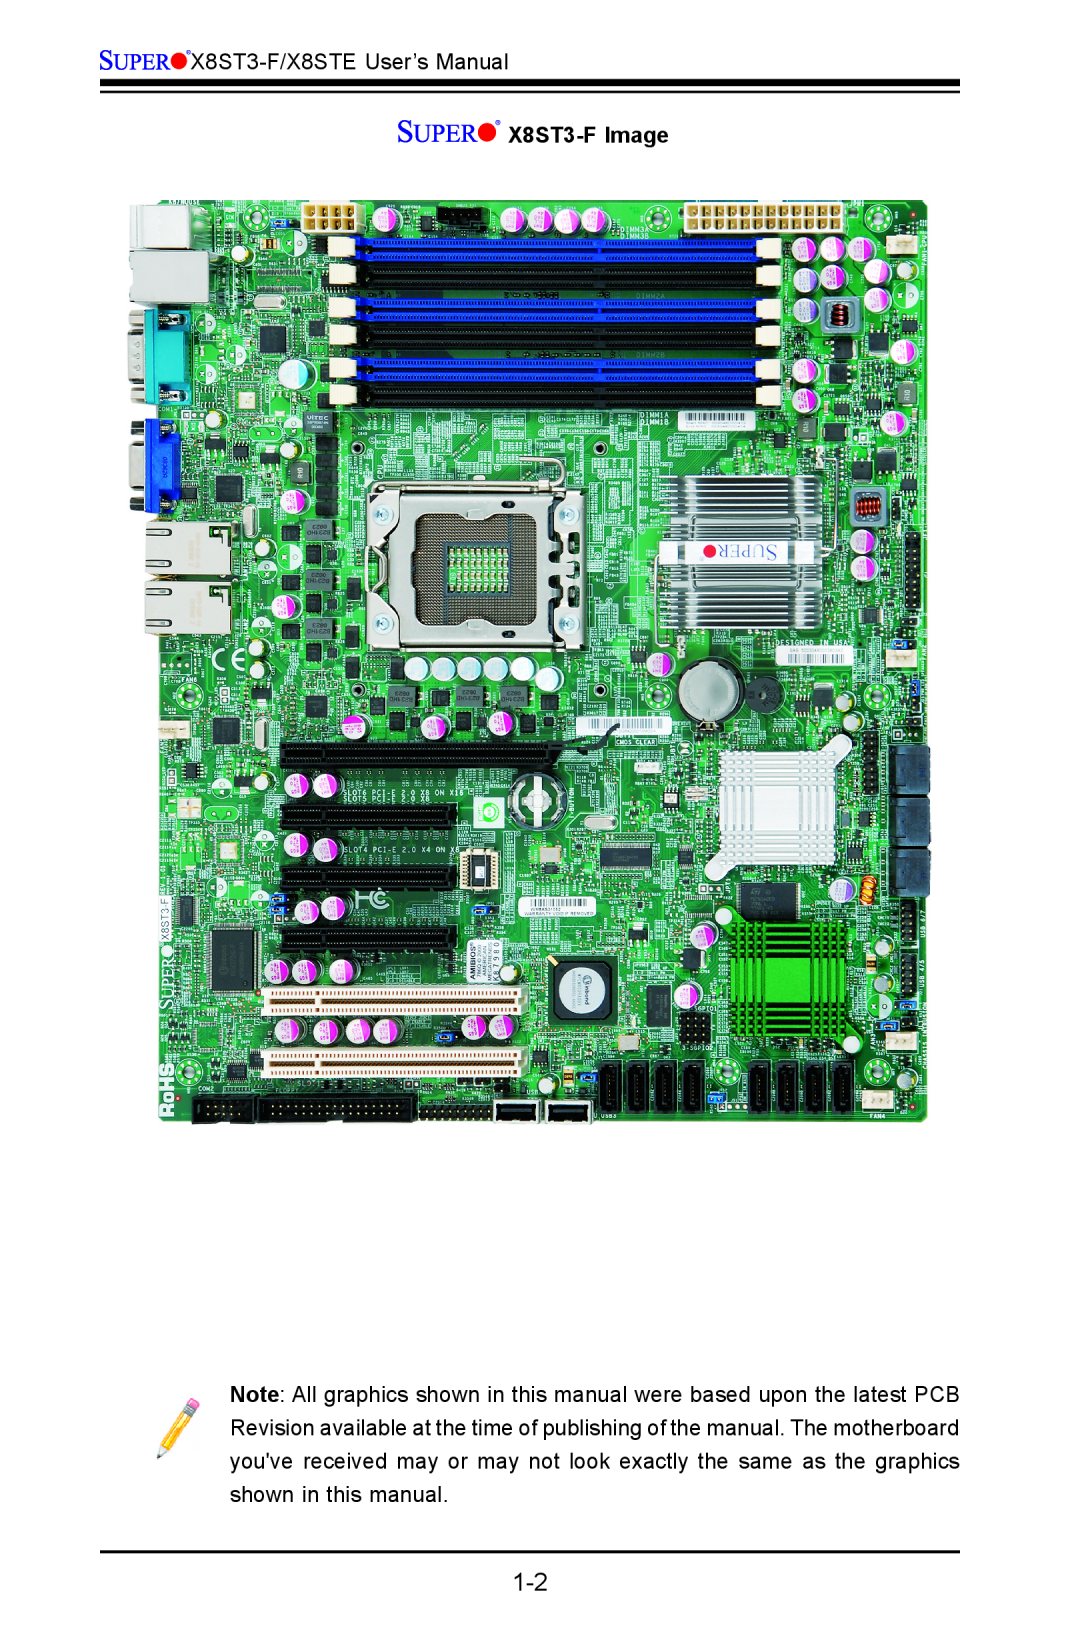 SUPER MICRO Computer user manual X8ST3-F Image, X8ST3-F/X8STE User’s Manual 